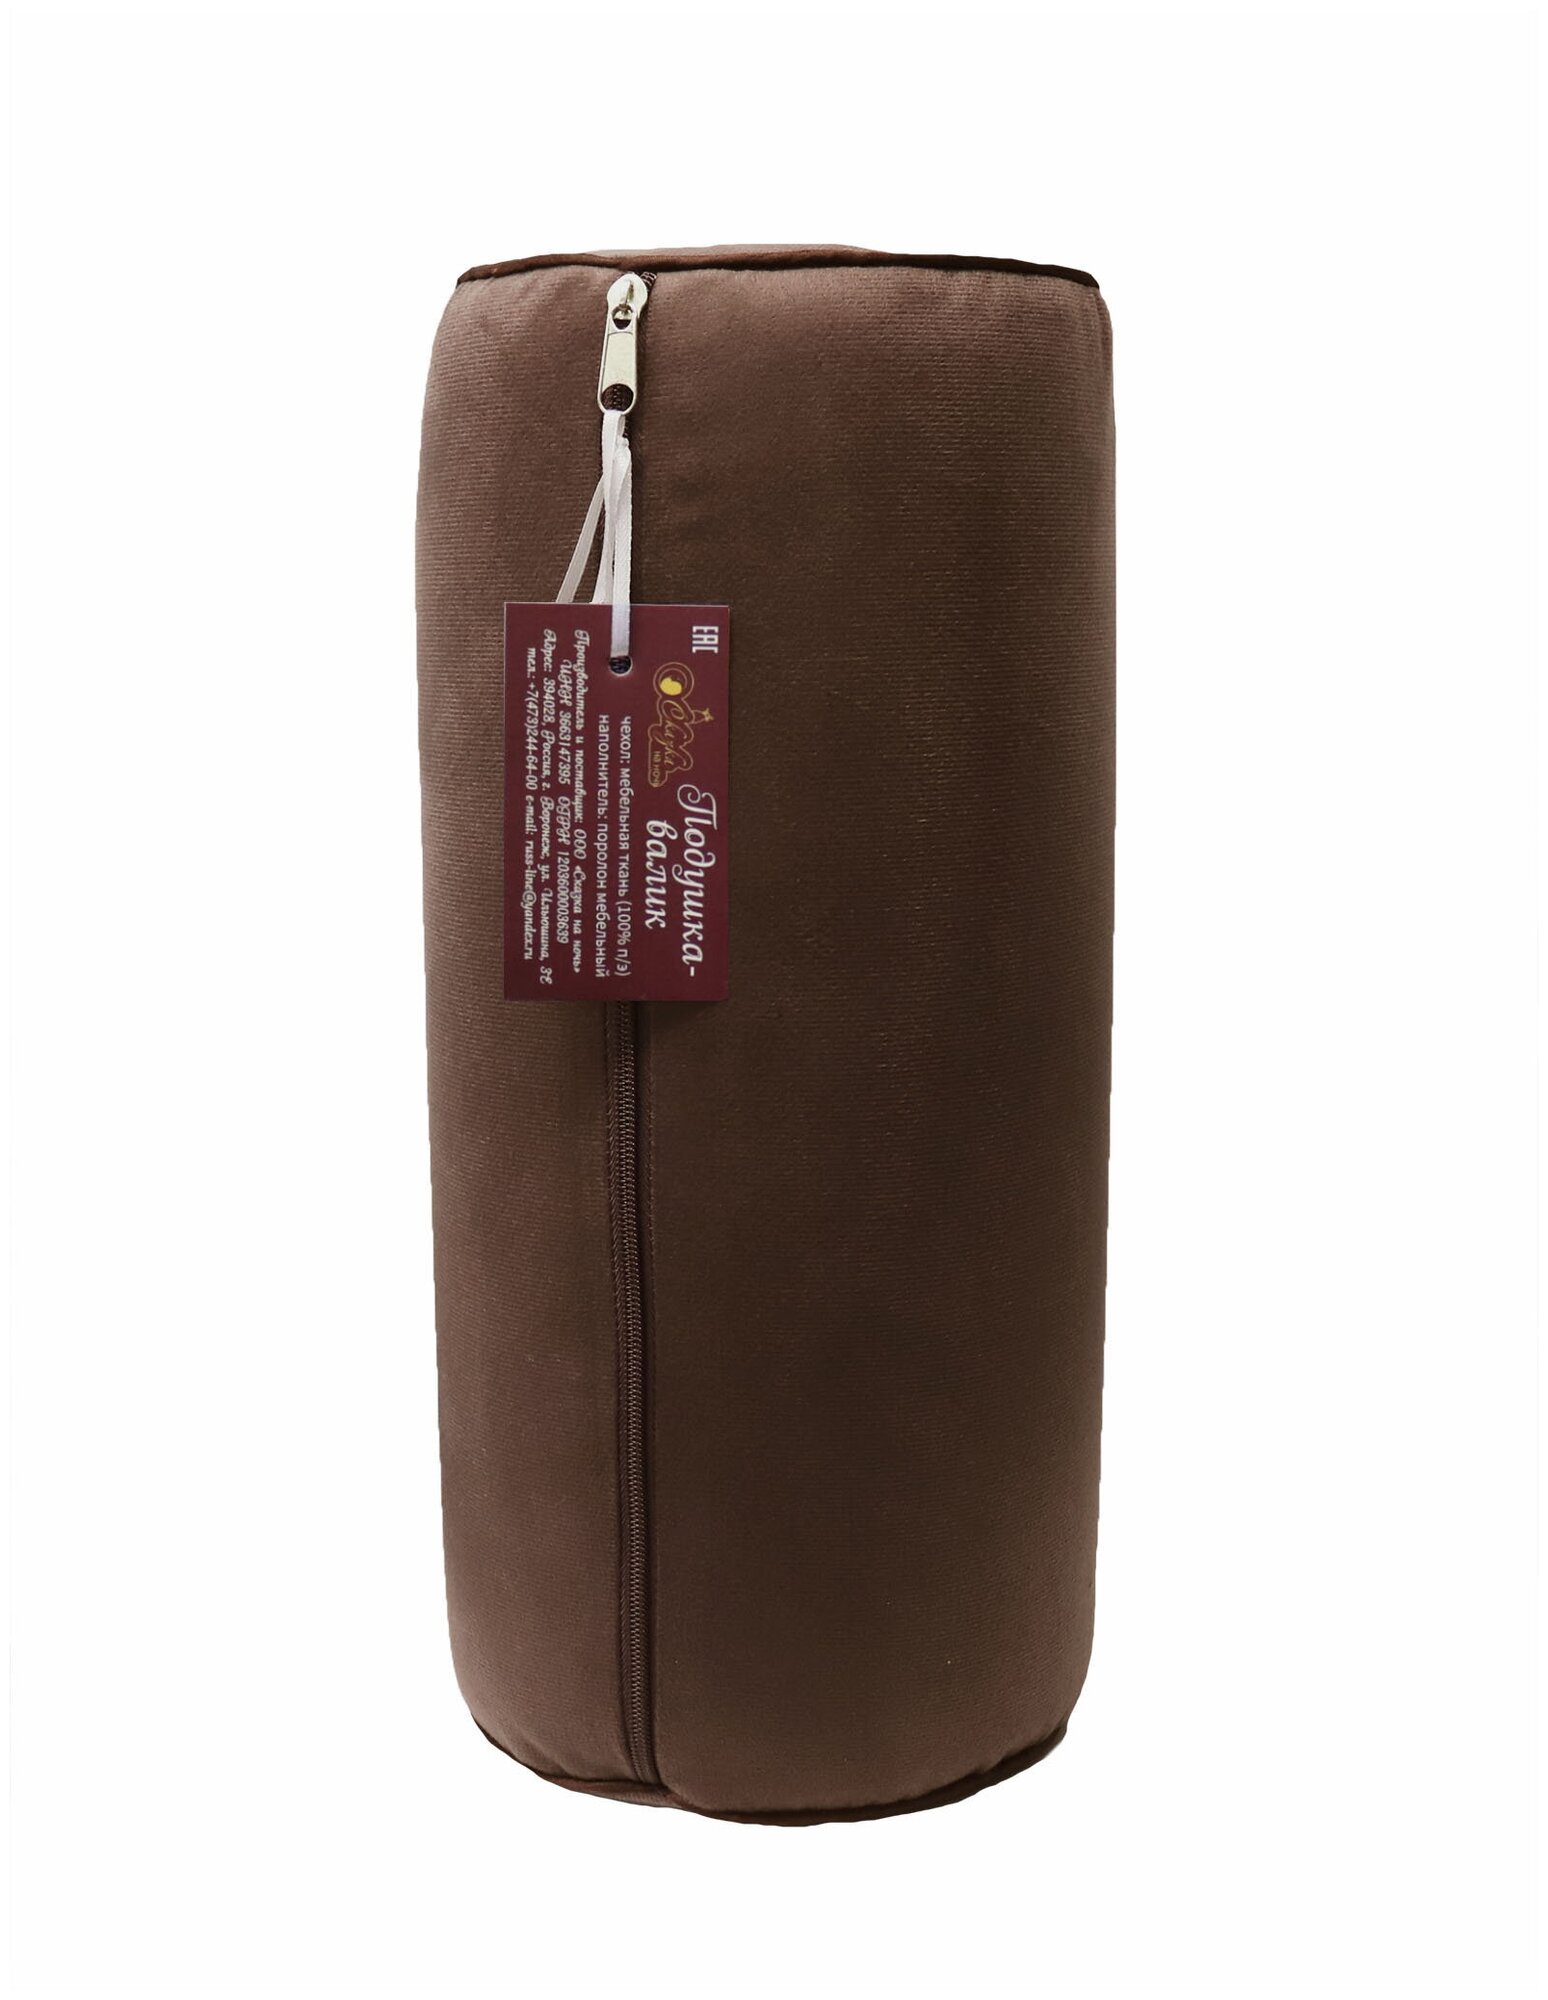 Подушка декоративная на диван валик 40х18 коричневый